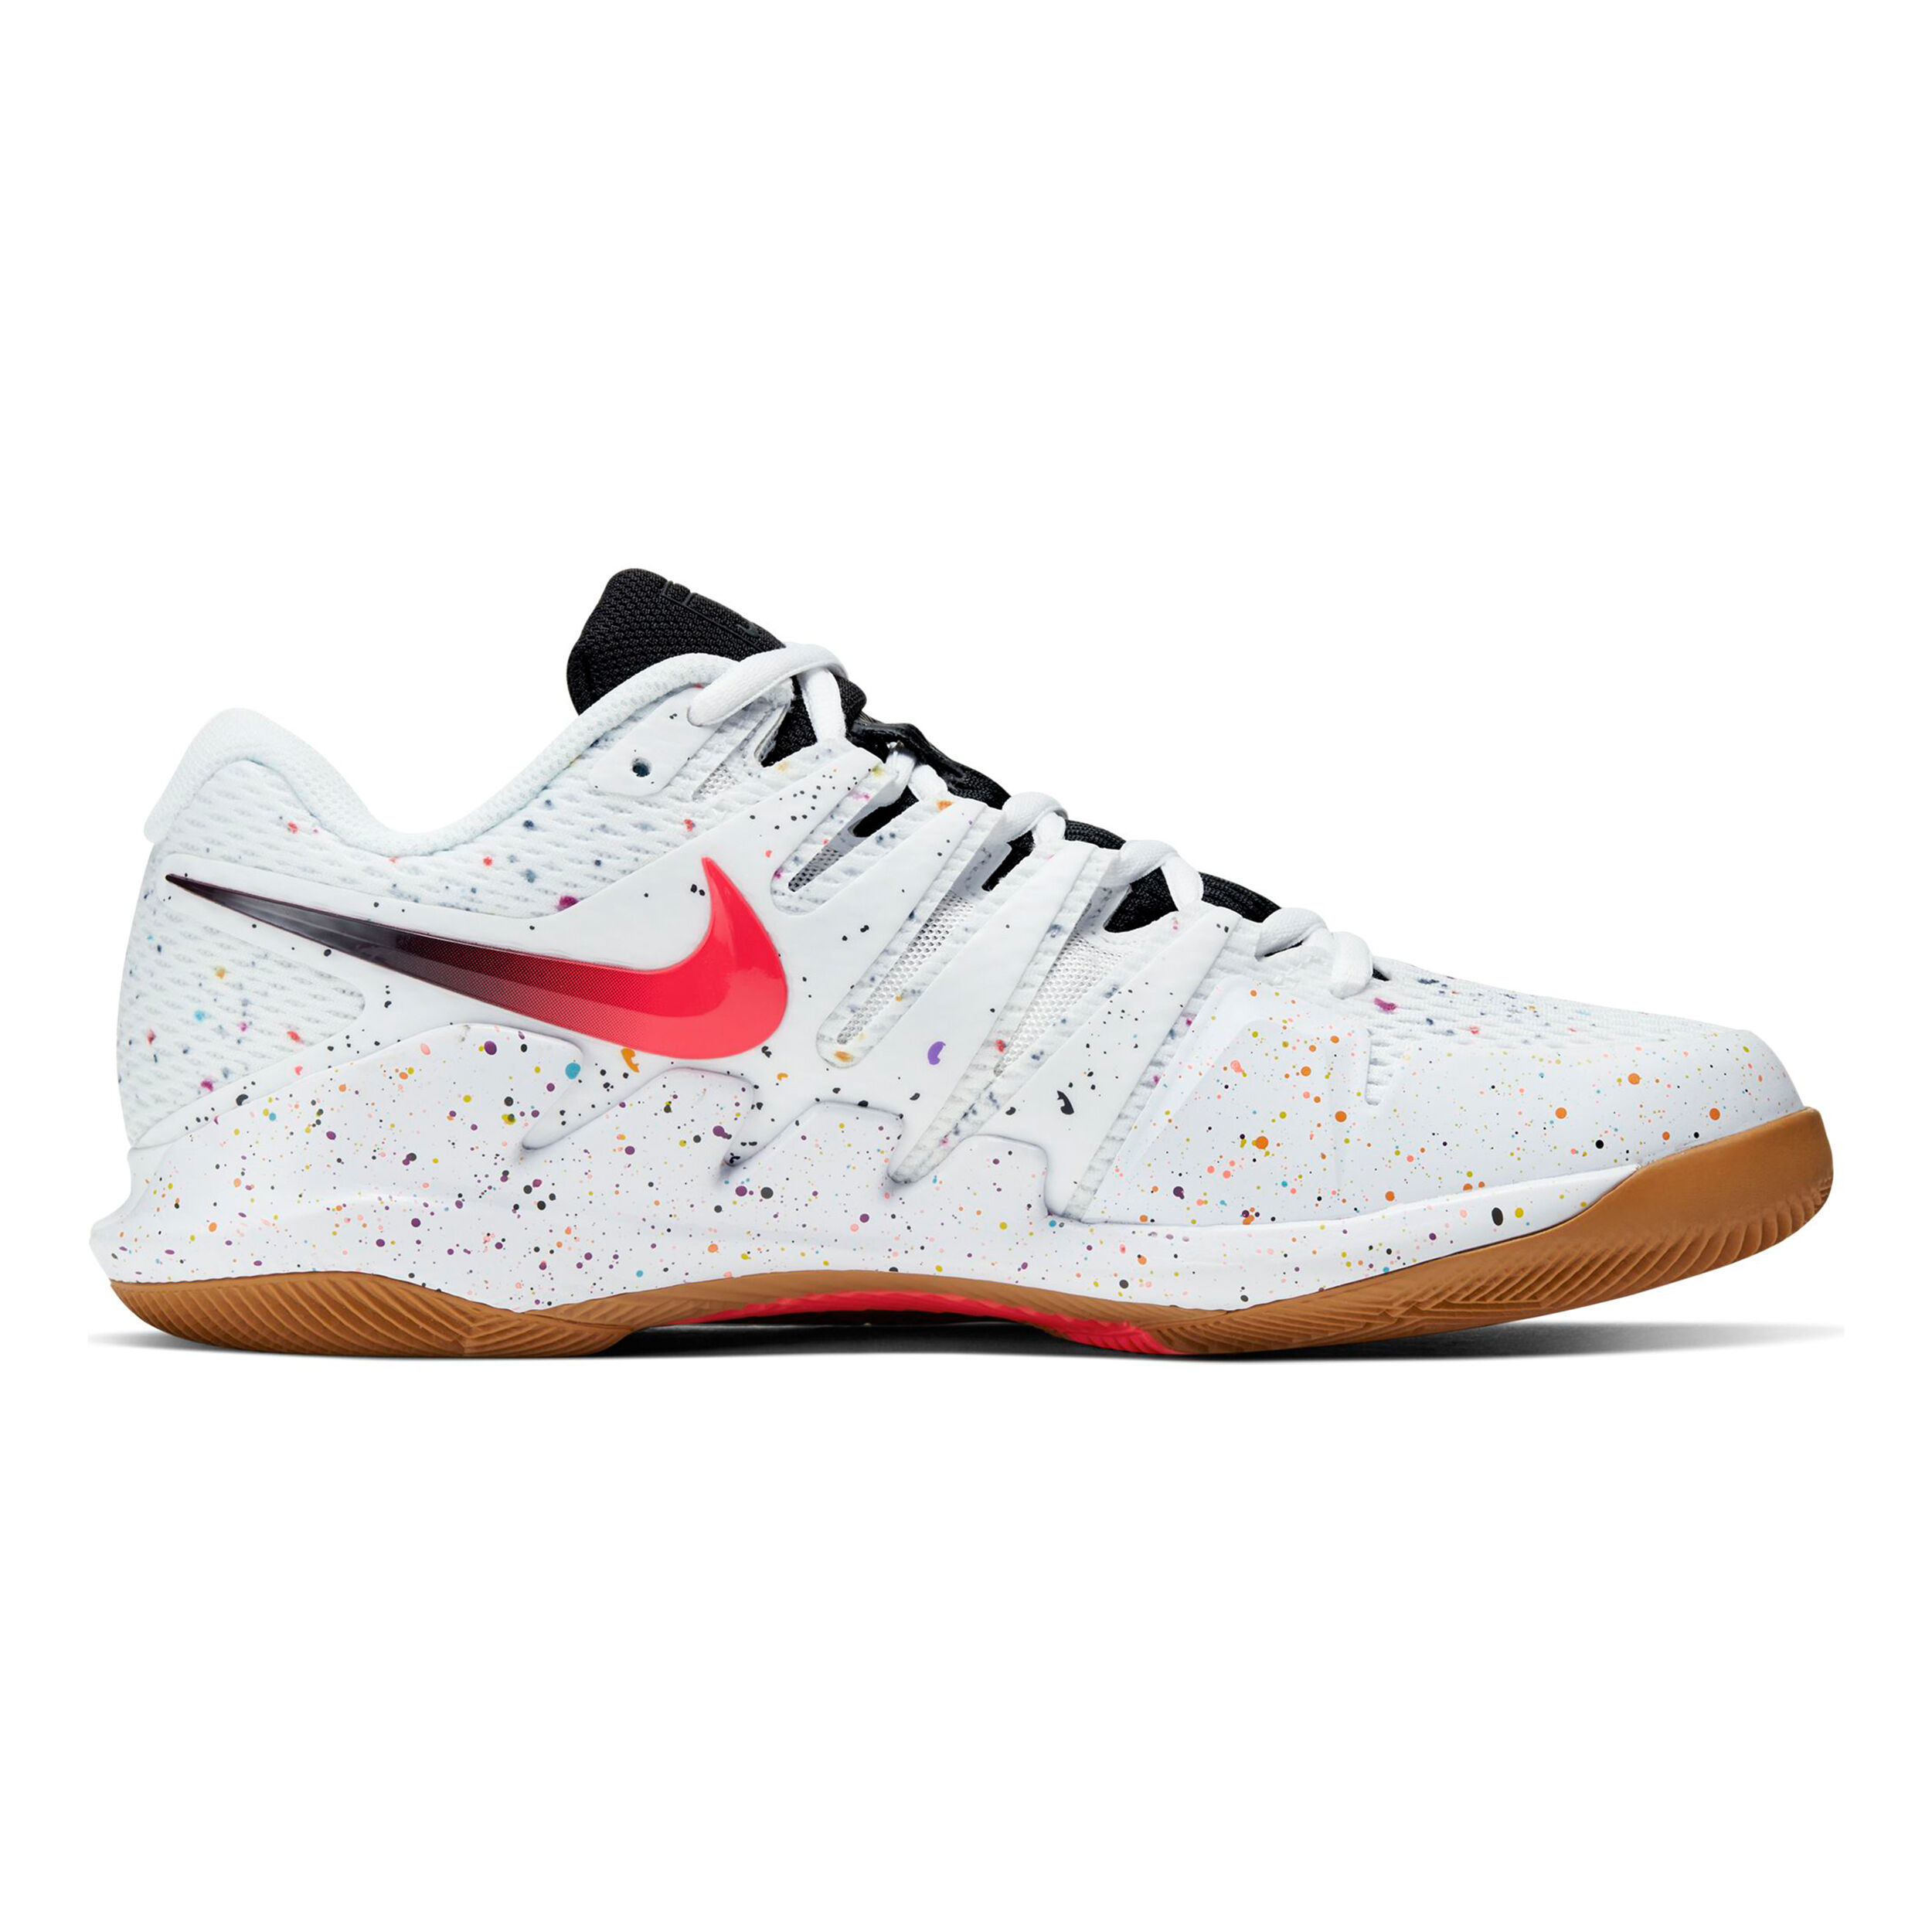 Nike AO 2020 compra online | Tennis-Point